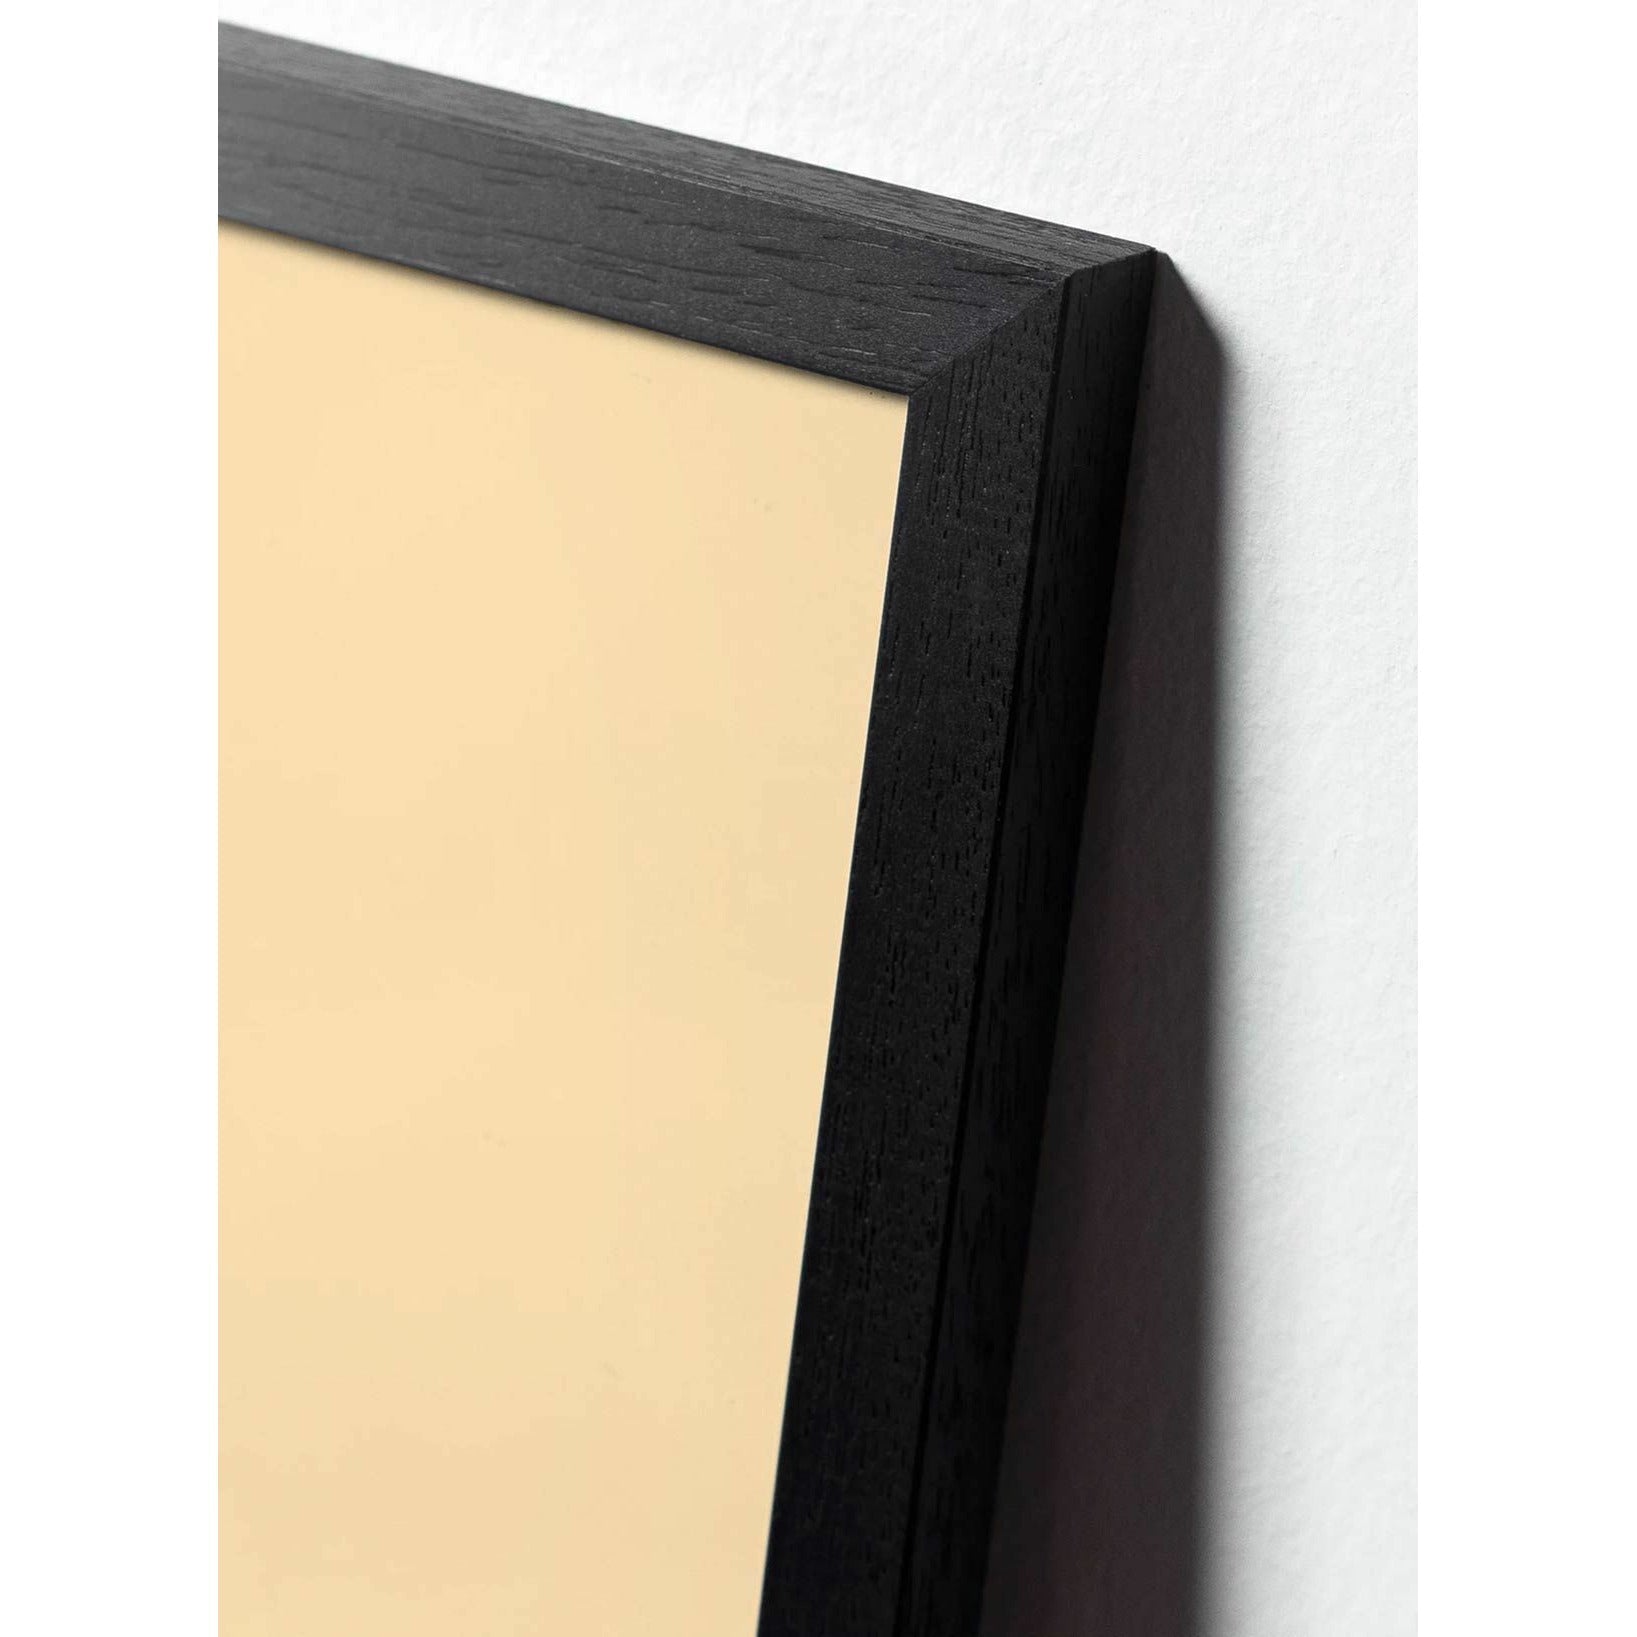 Póster de formato de cruce de huevo de creación, marco en madera lacada negra de 30x40 cm, negro